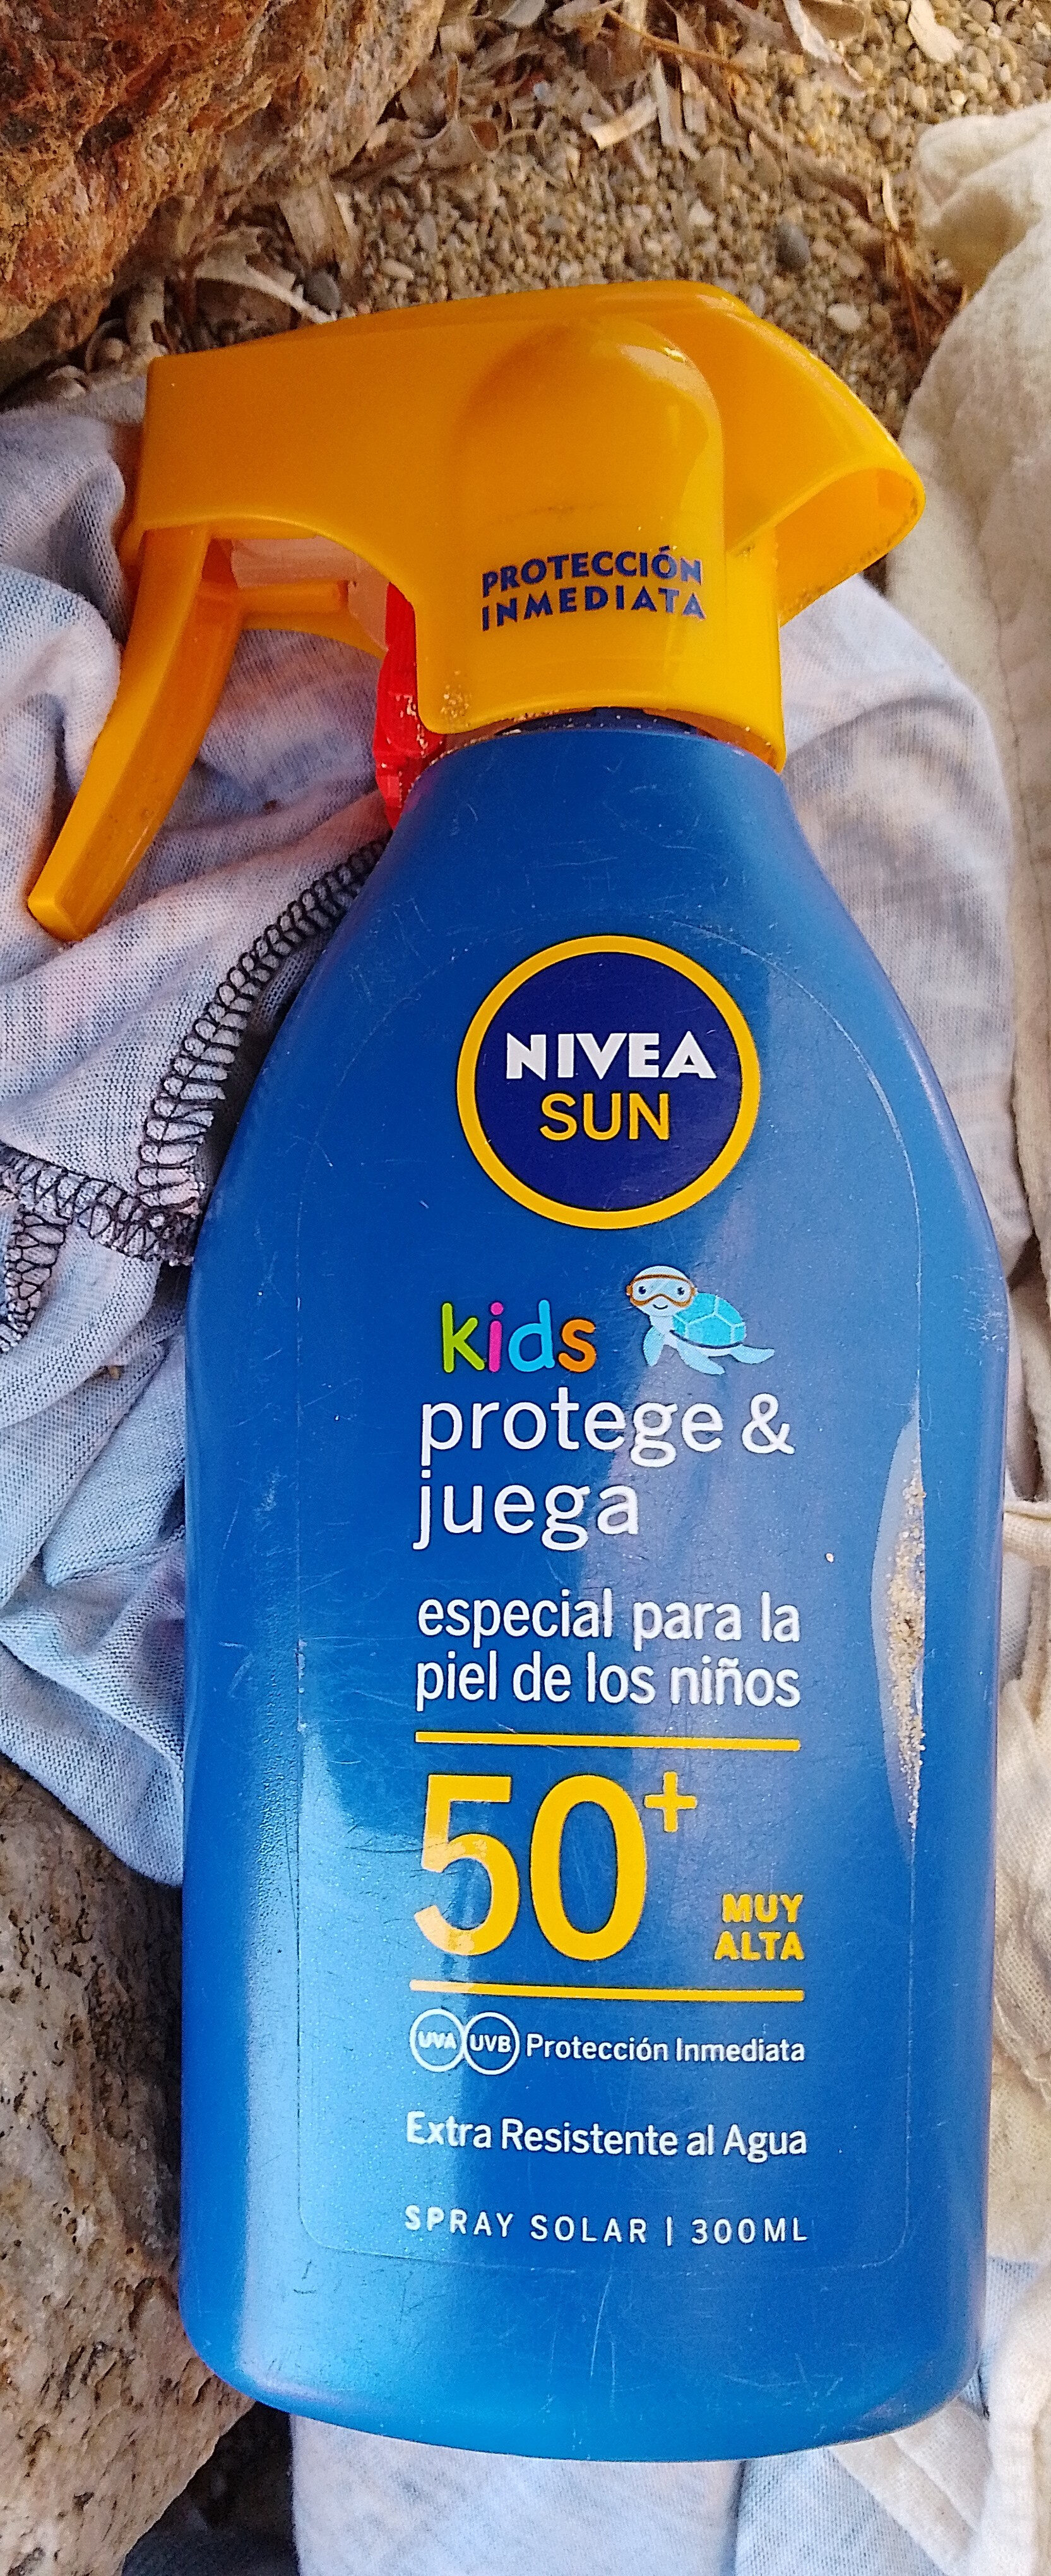 Nivea Sun kids 50+ - 製品 - es